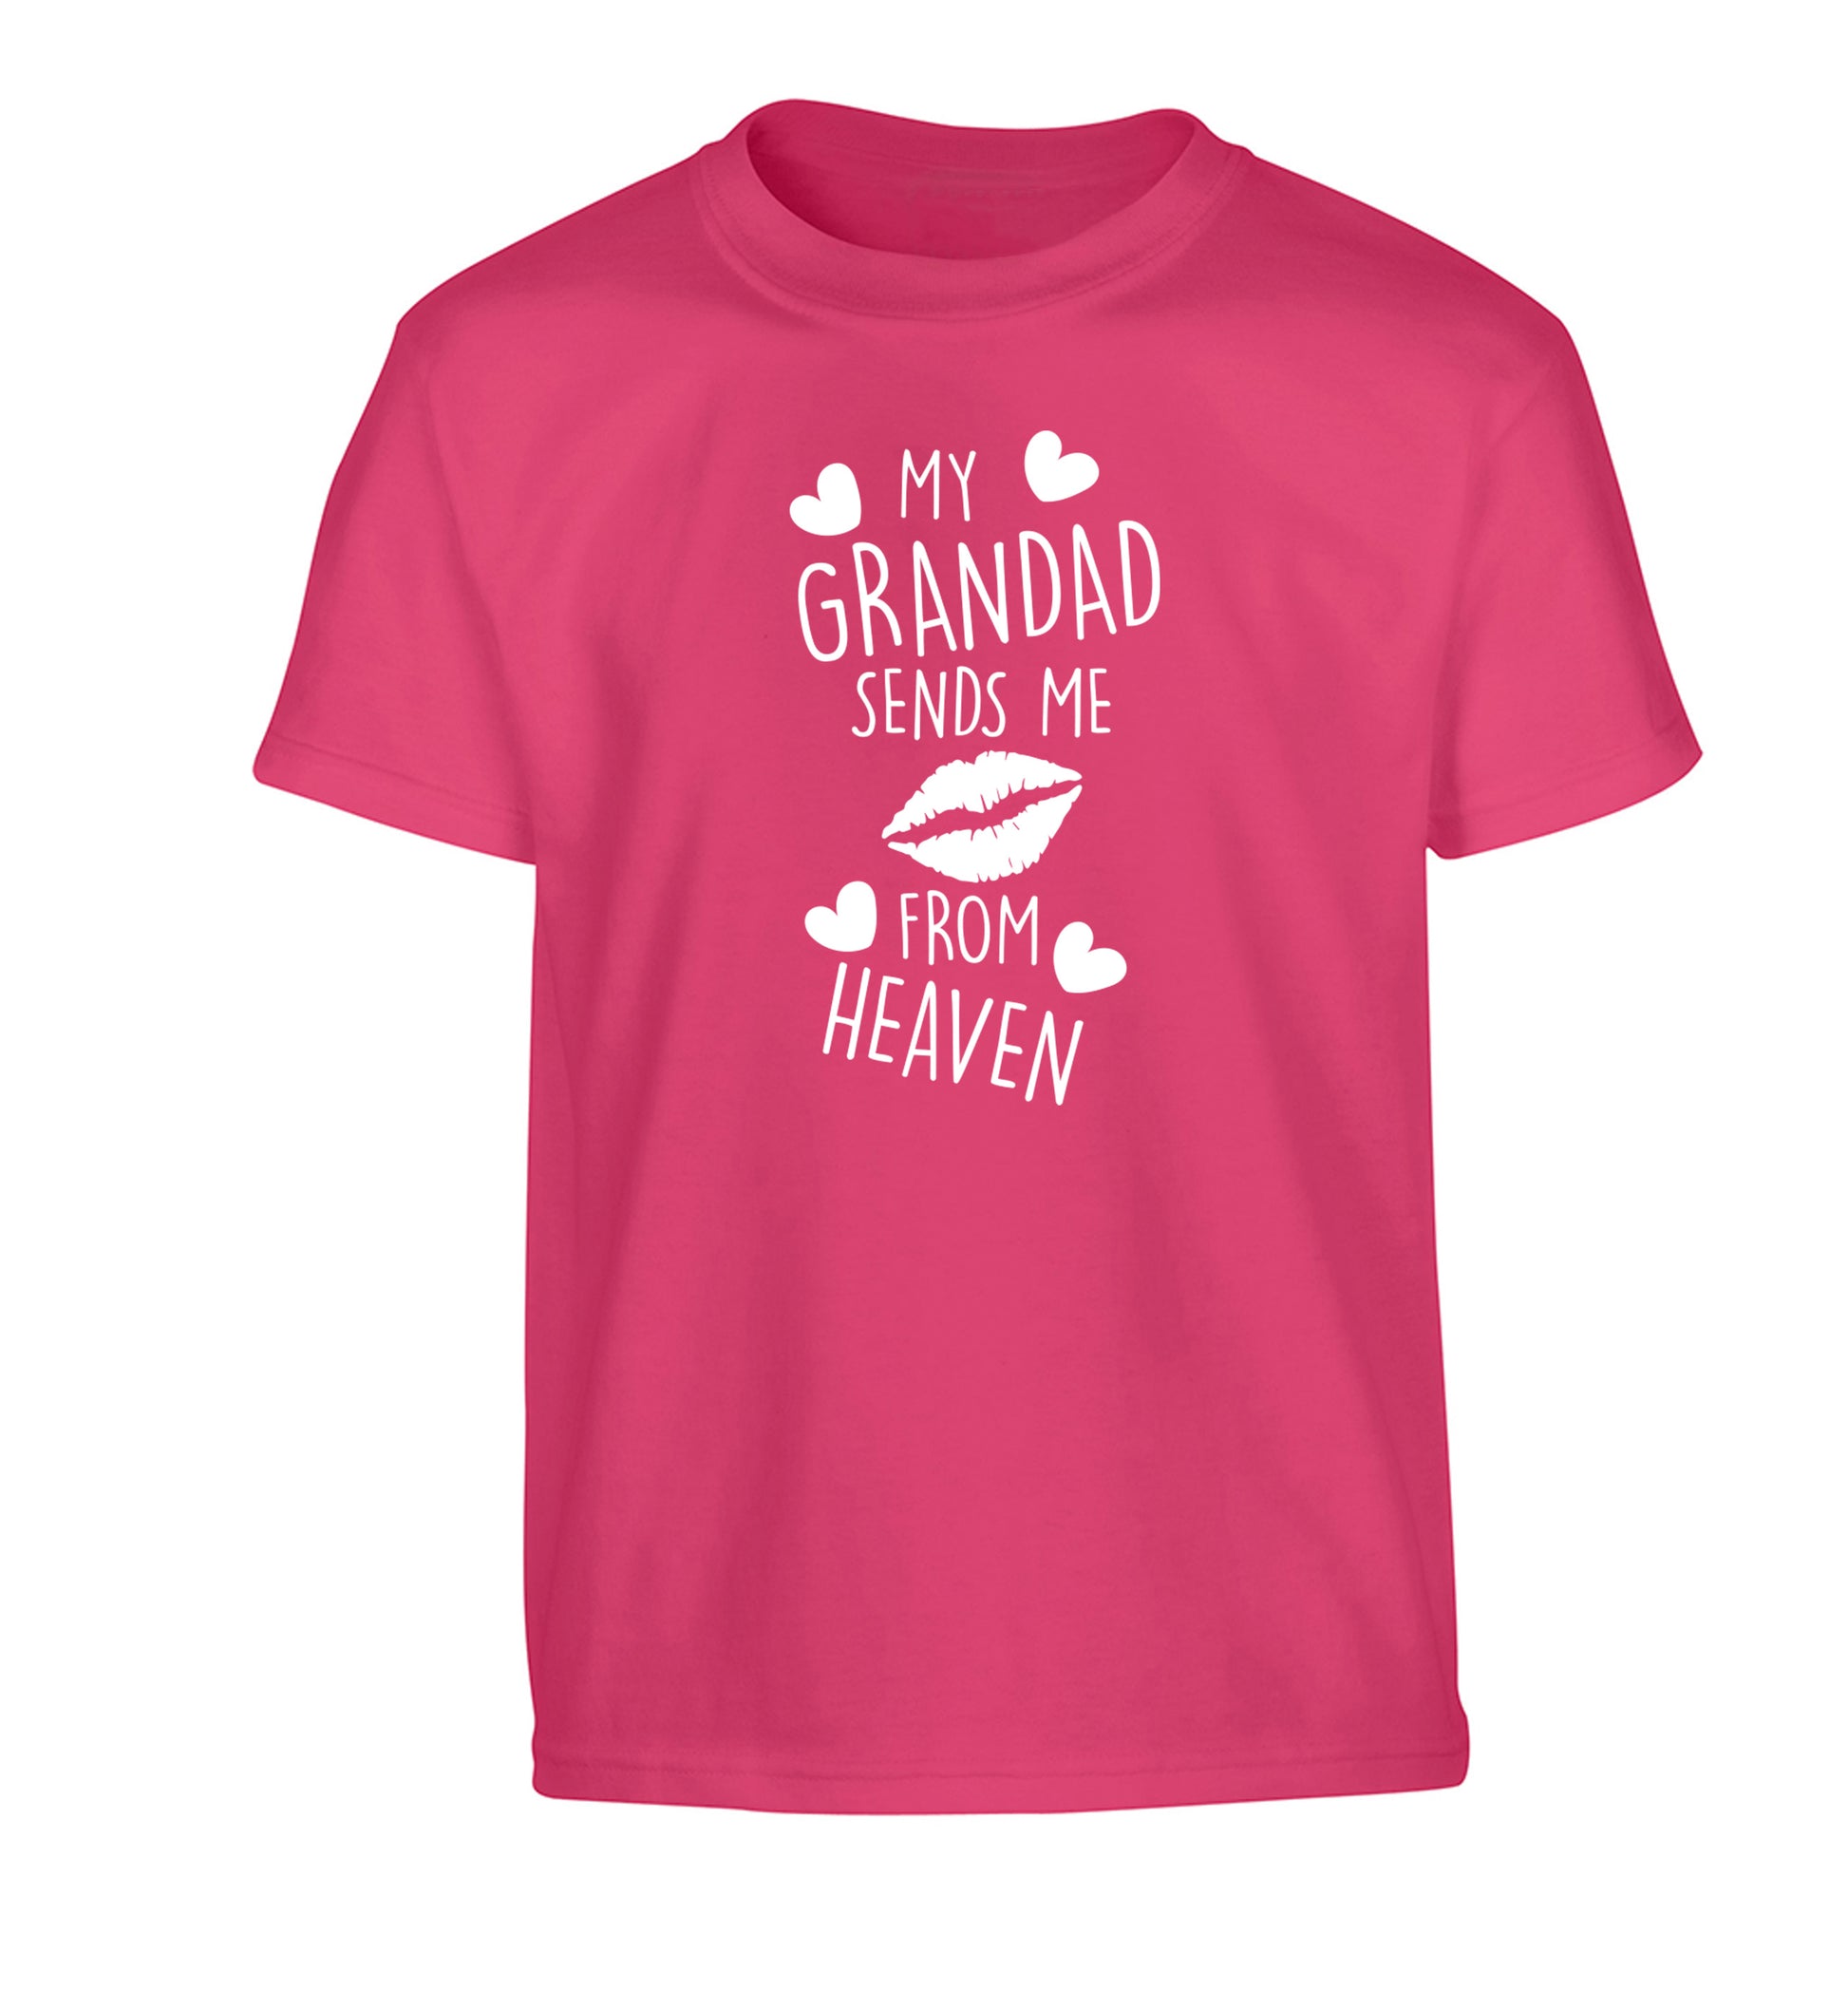 My grandad sends me kisses from heaven Children's pink Tshirt 12-14 Years